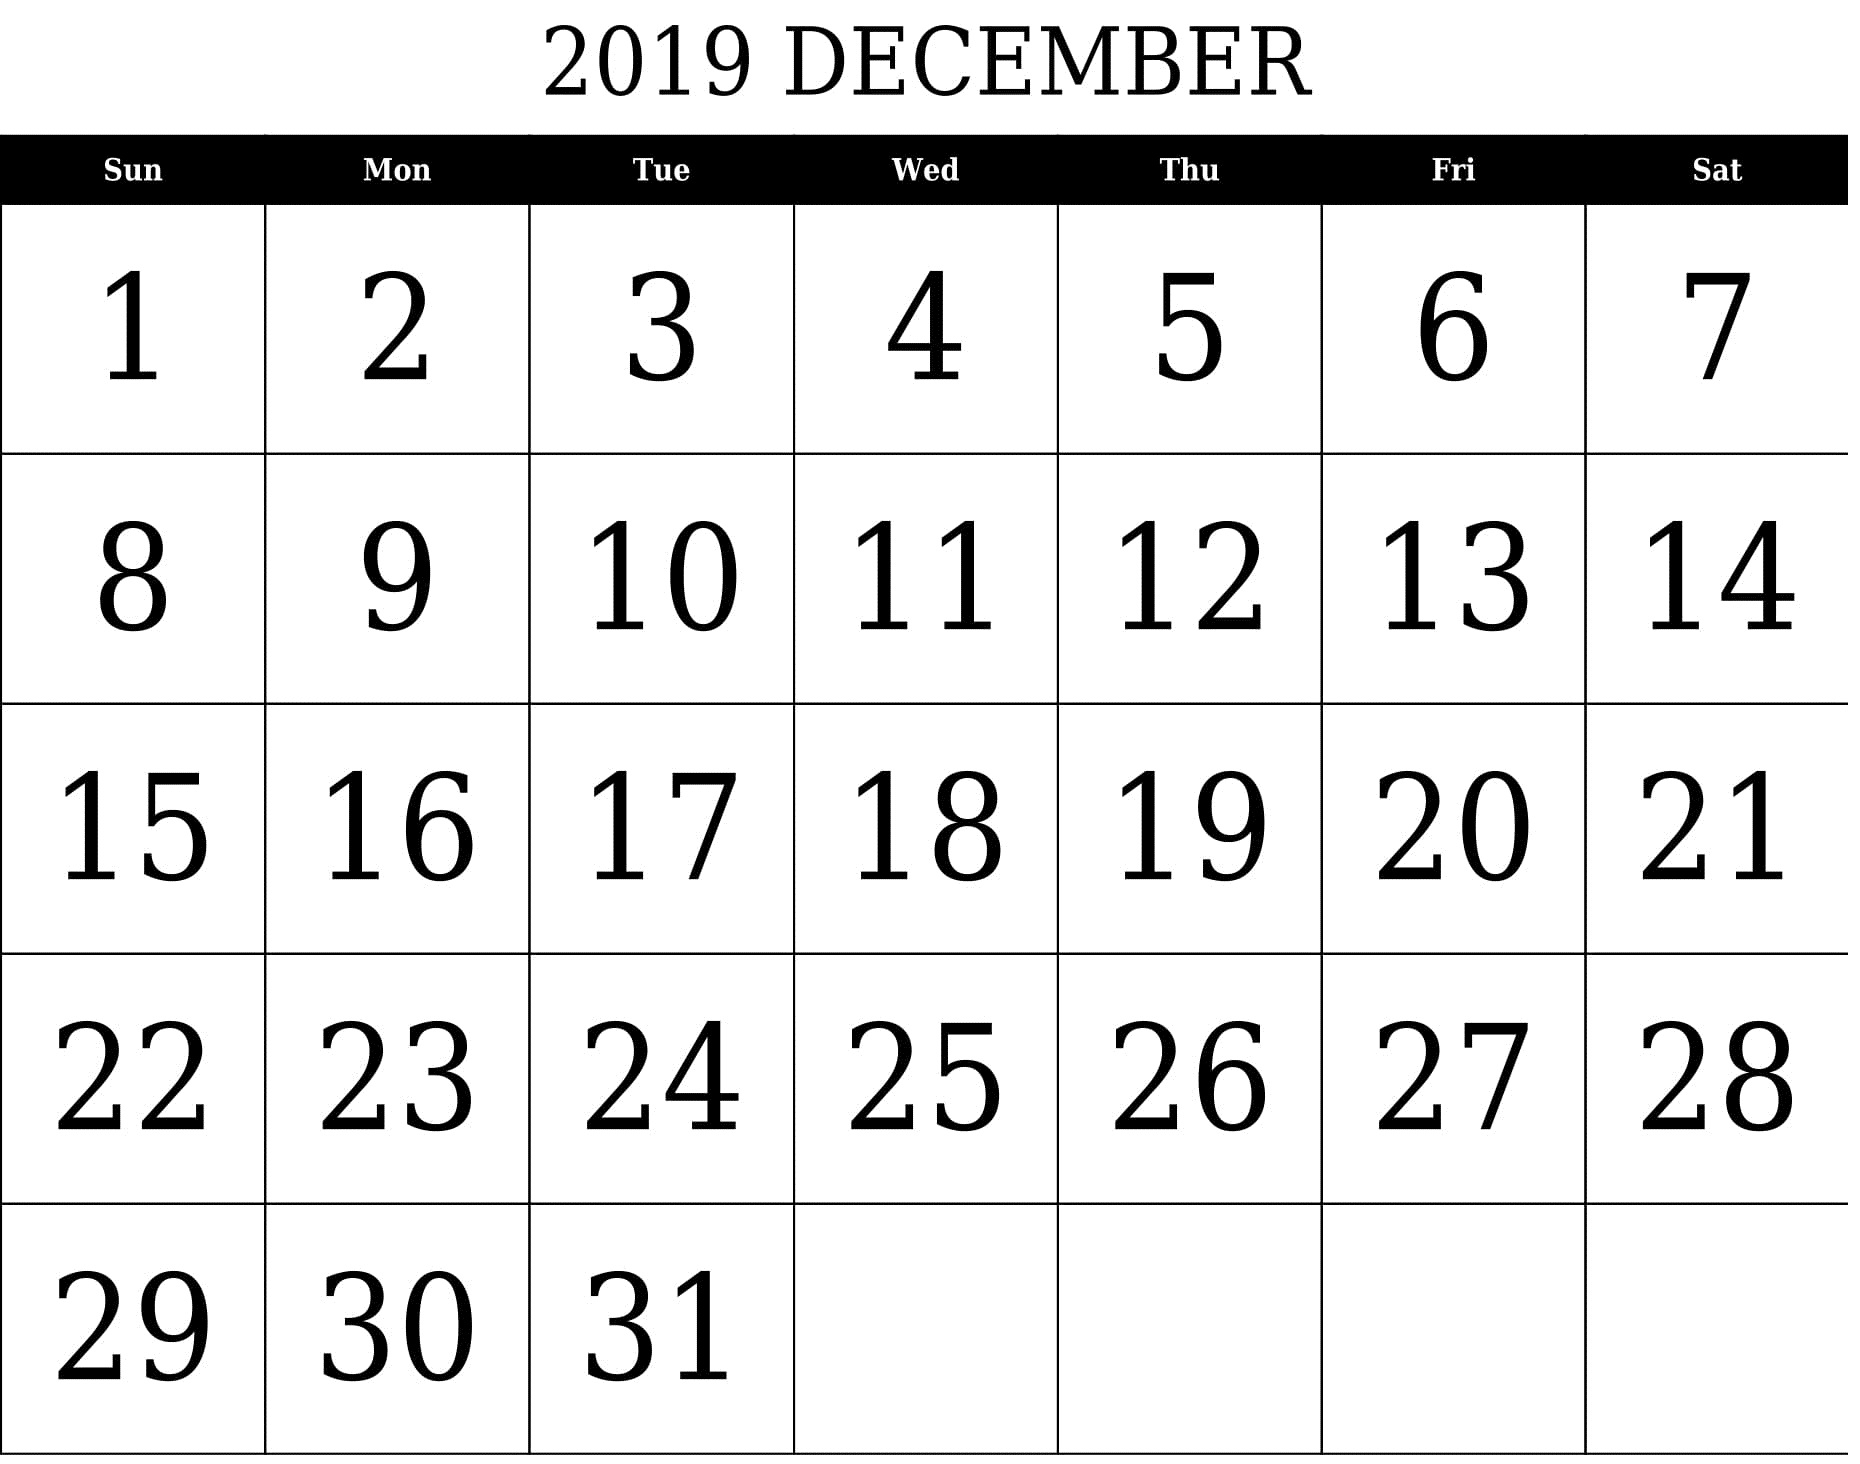 December 2019 Printable Calendar Free Download - Latest